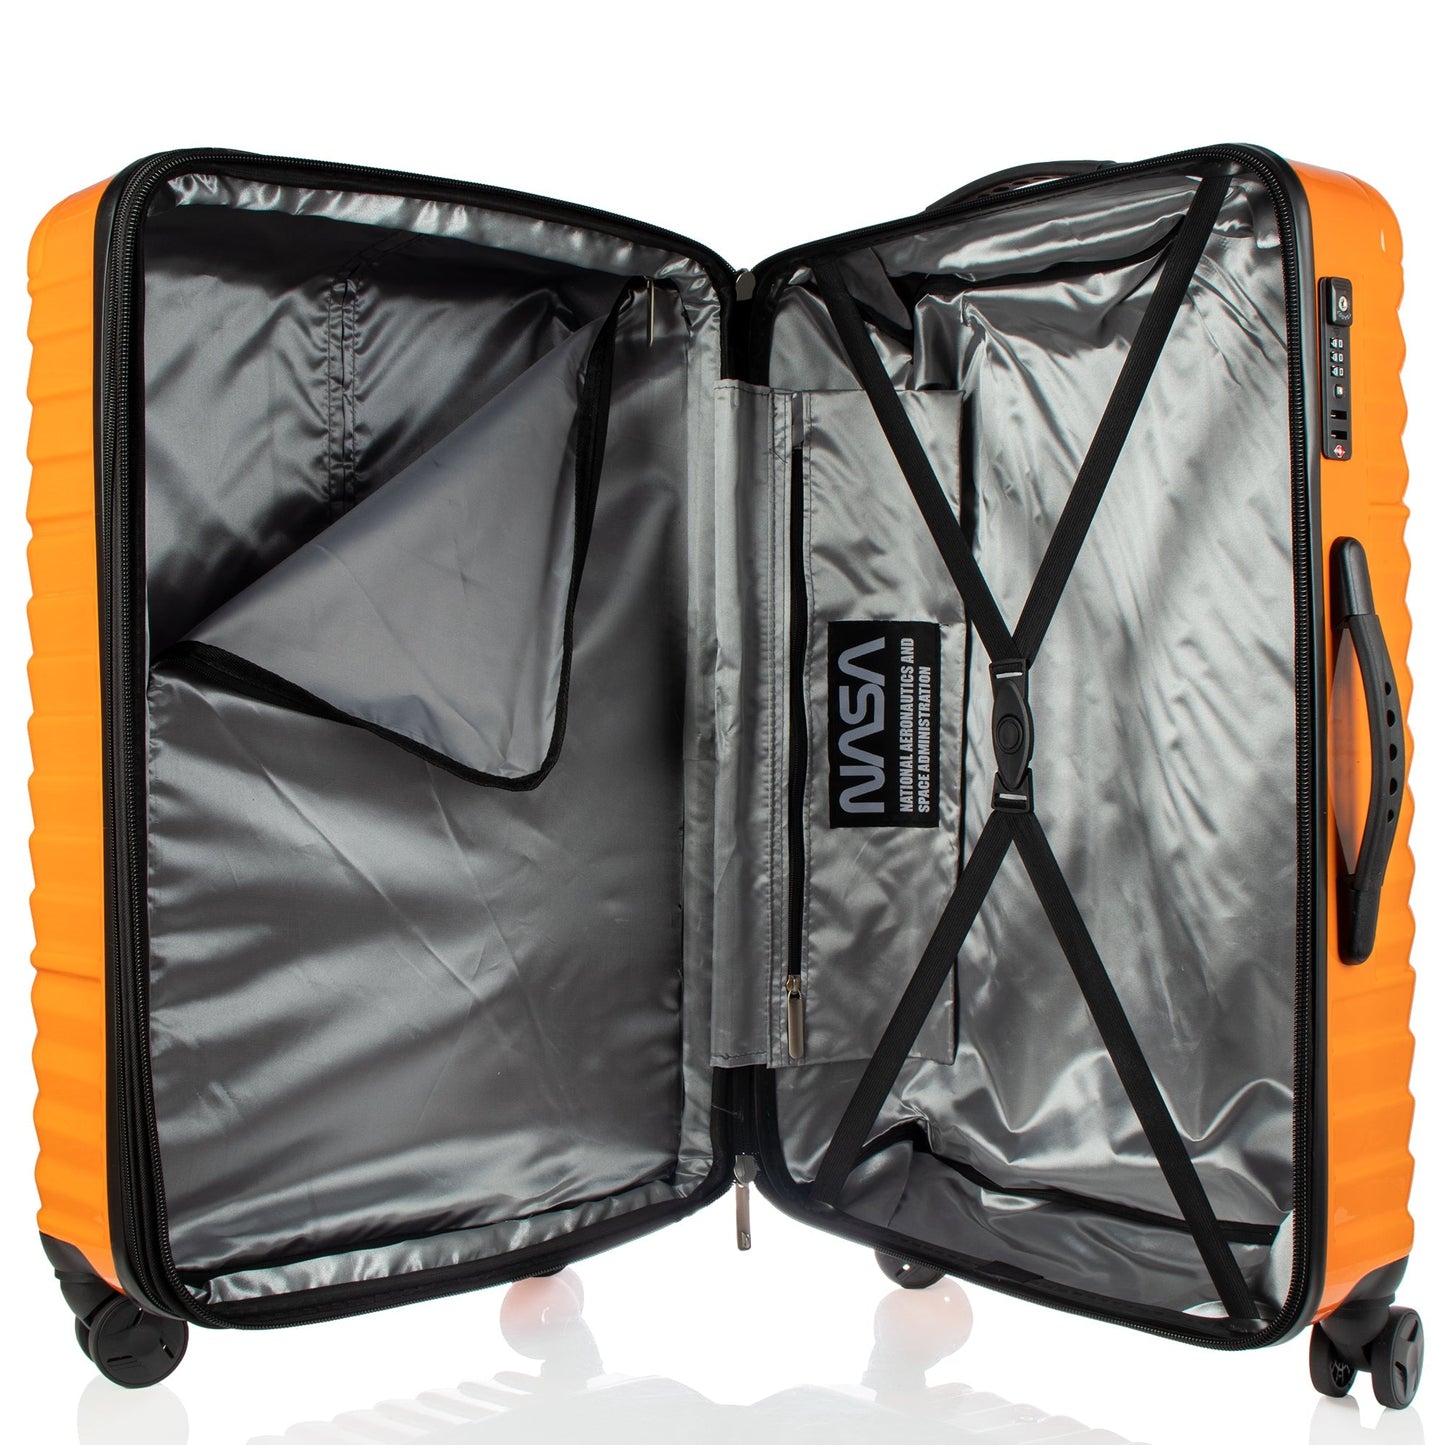 Space Shuttle Collection Orange Luggage (21/25/29") Suitcase Lock Spinner Hardshell